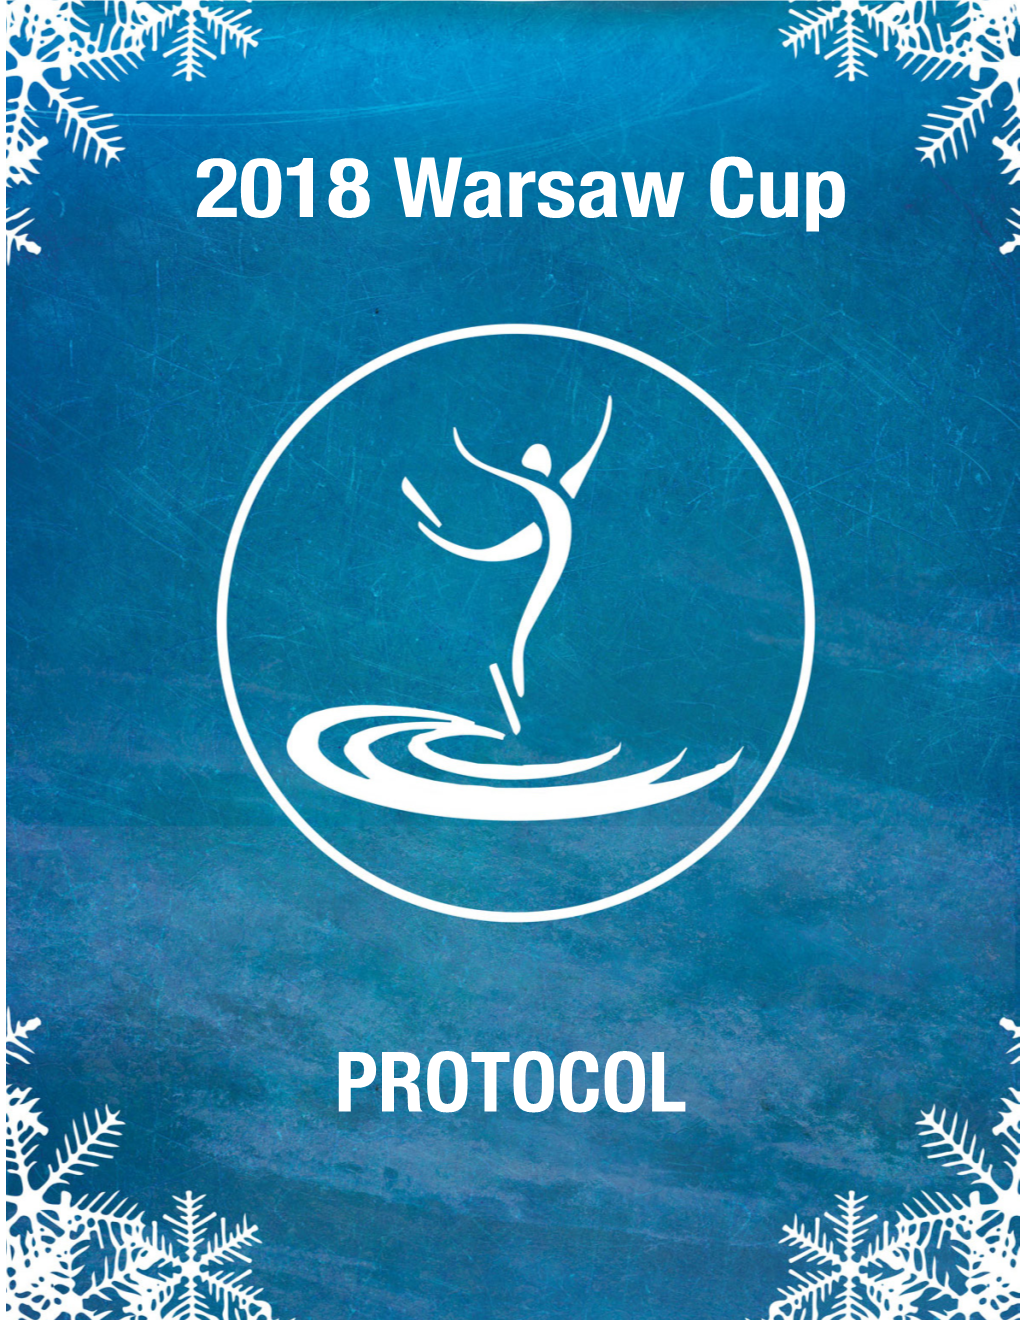 PROTOCOL 2018 Warsaw